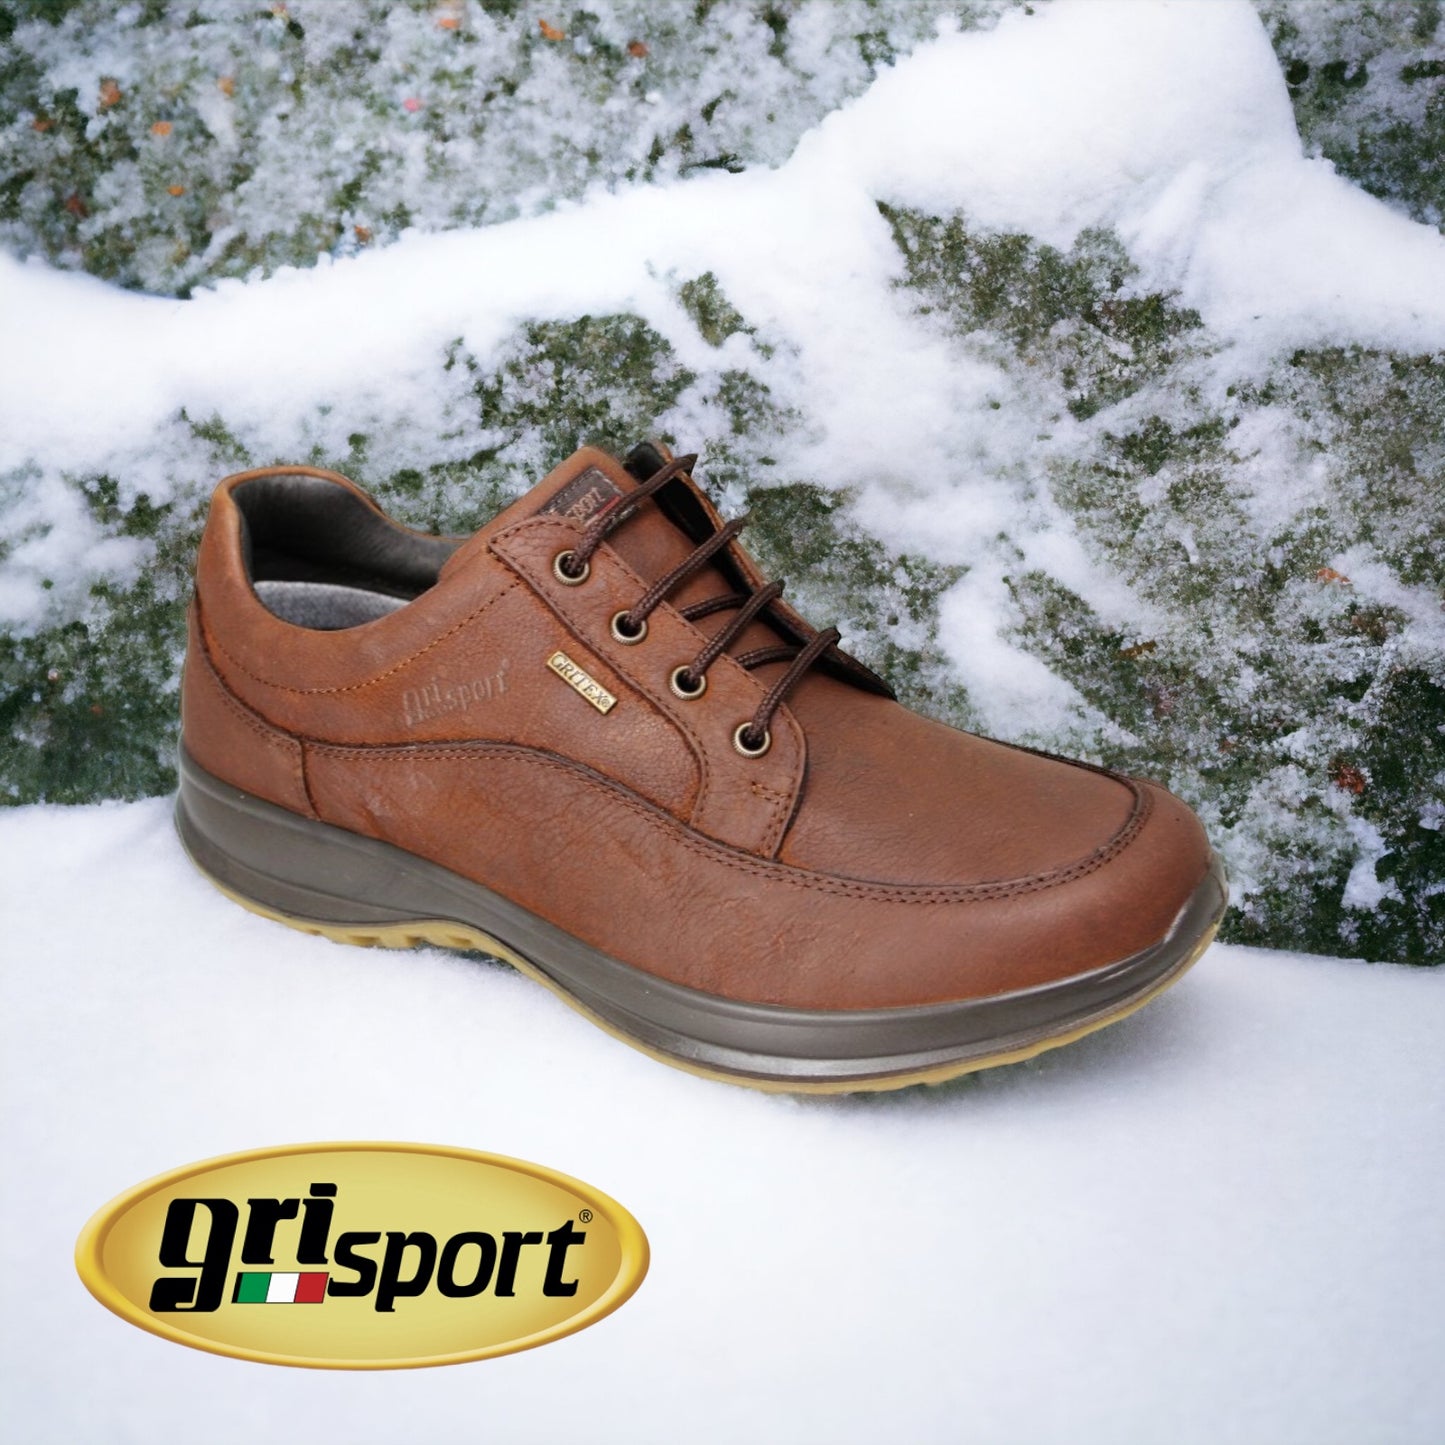 Gri Sport Livingston waterproof brown - Kirbys Footwear Ltd